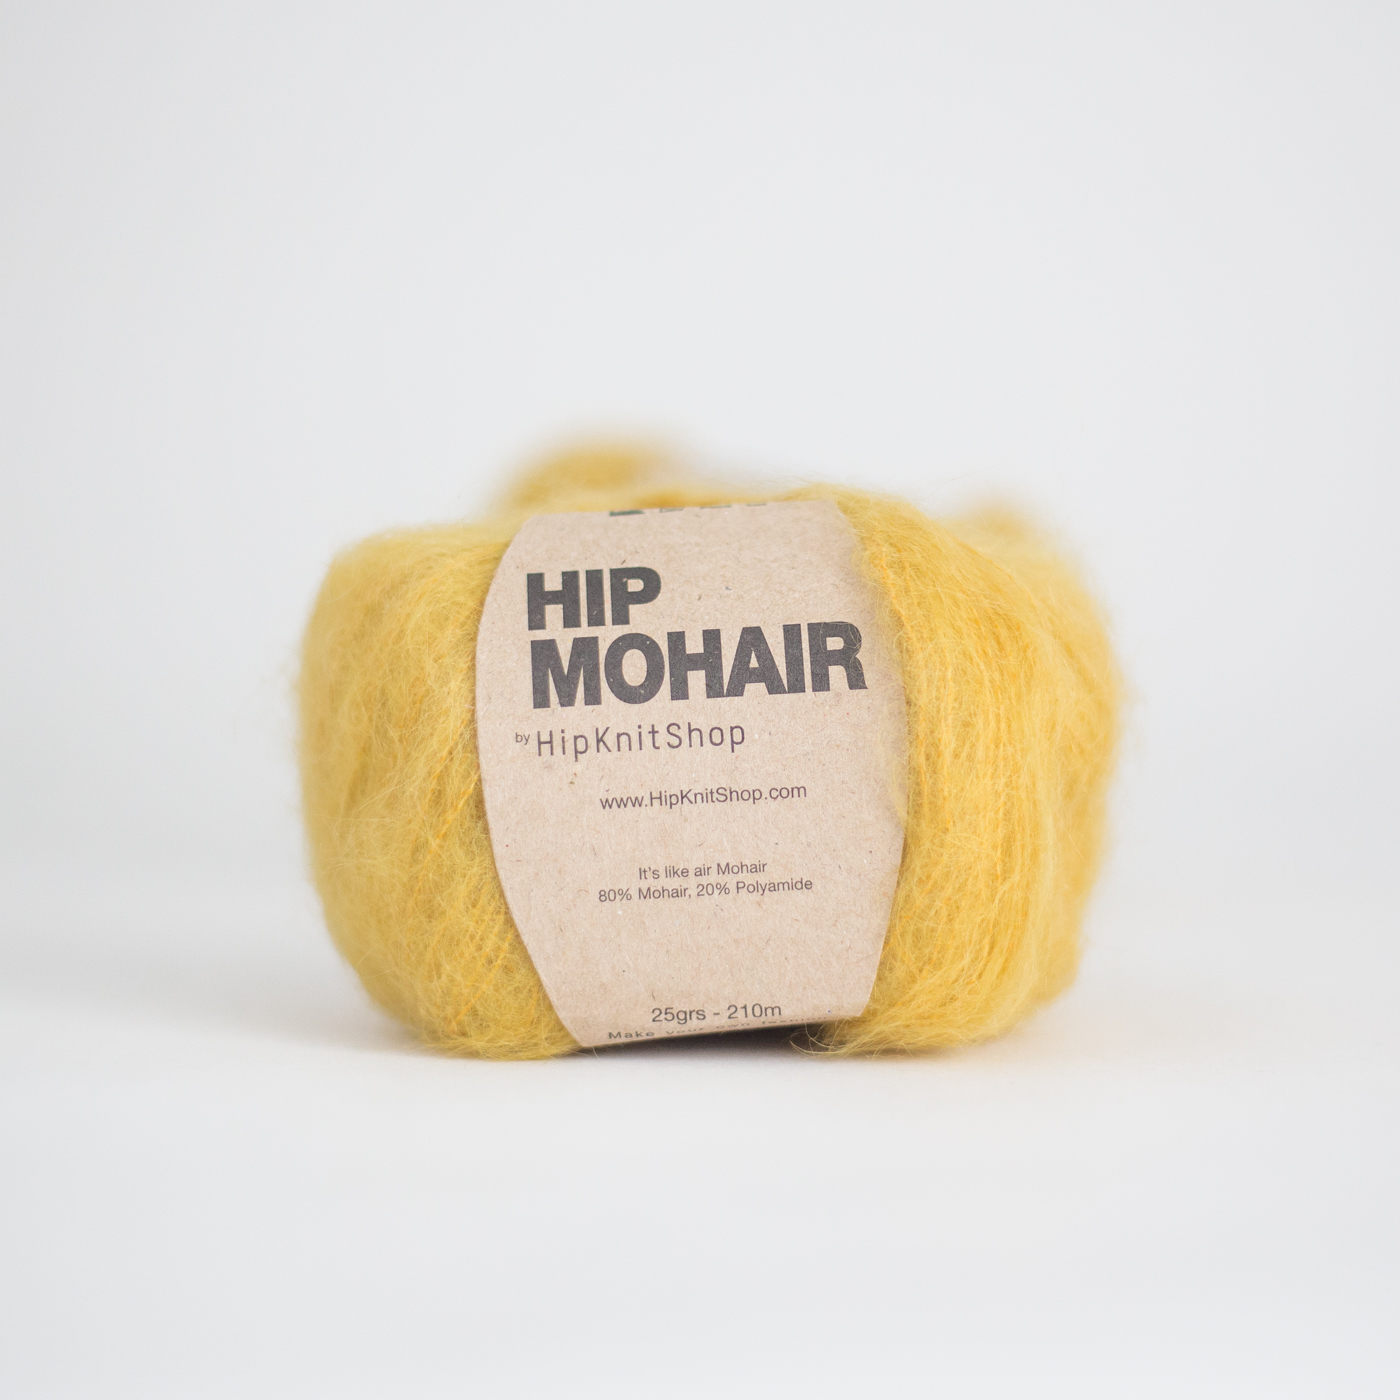  - Honey dream mohair| Hip Mohair Yarn - by HipKnitShop - 01/06/2018